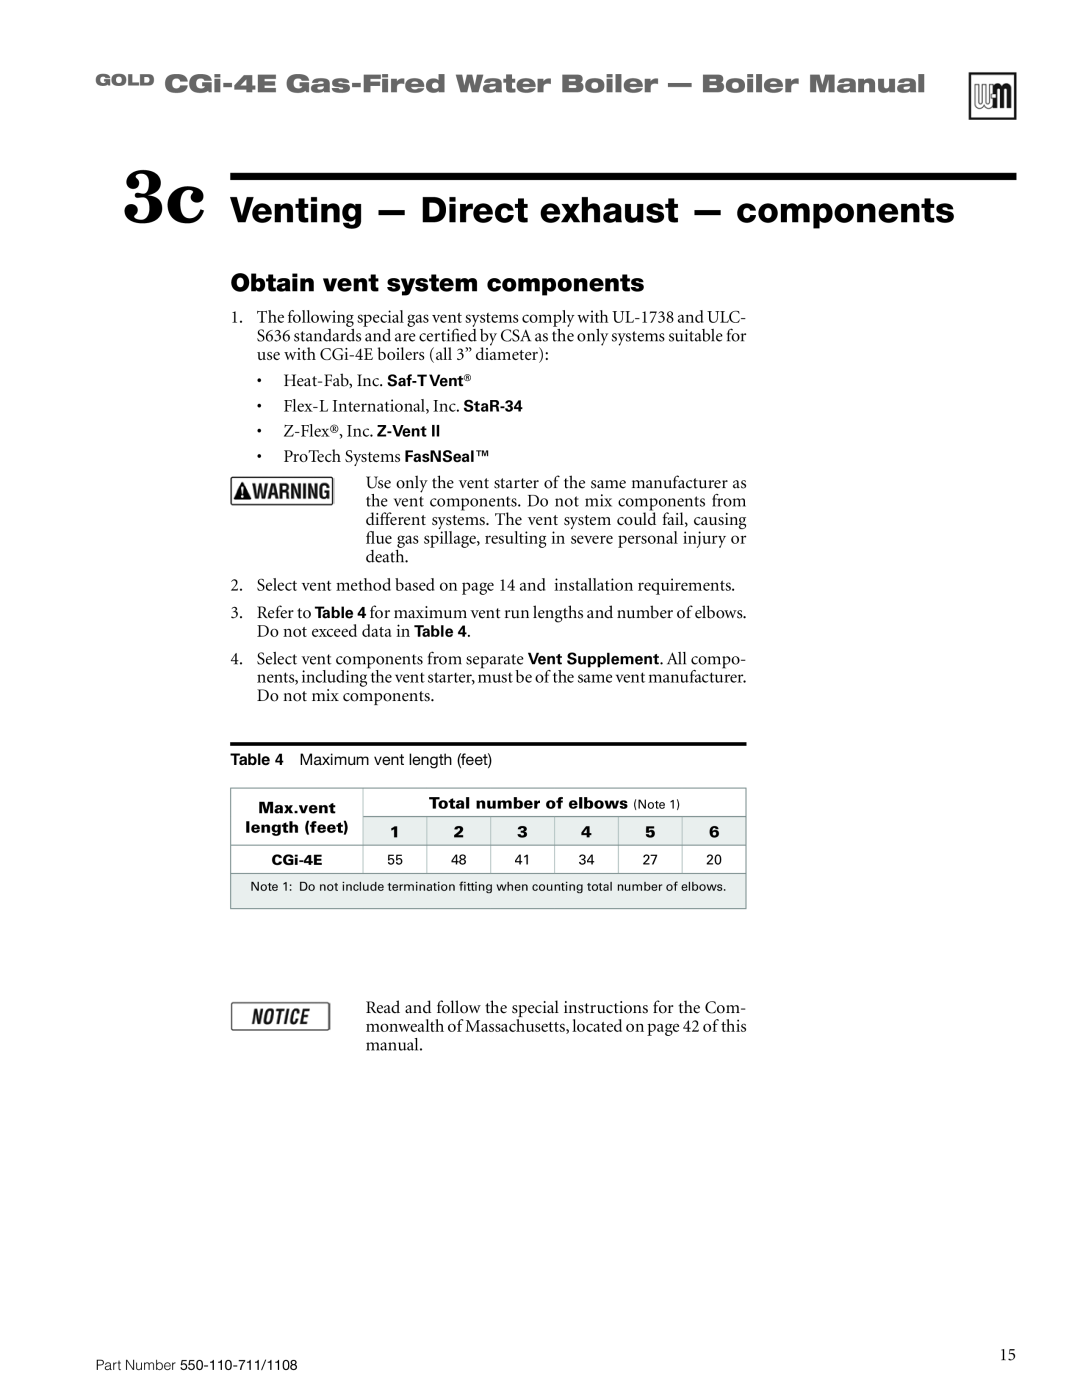 Weil-McLain CGI-4E manual 3c Venting - Direct exhaust - components, GOLD CGi-4E Gas-FiredWater Boiler - Boiler Manual 